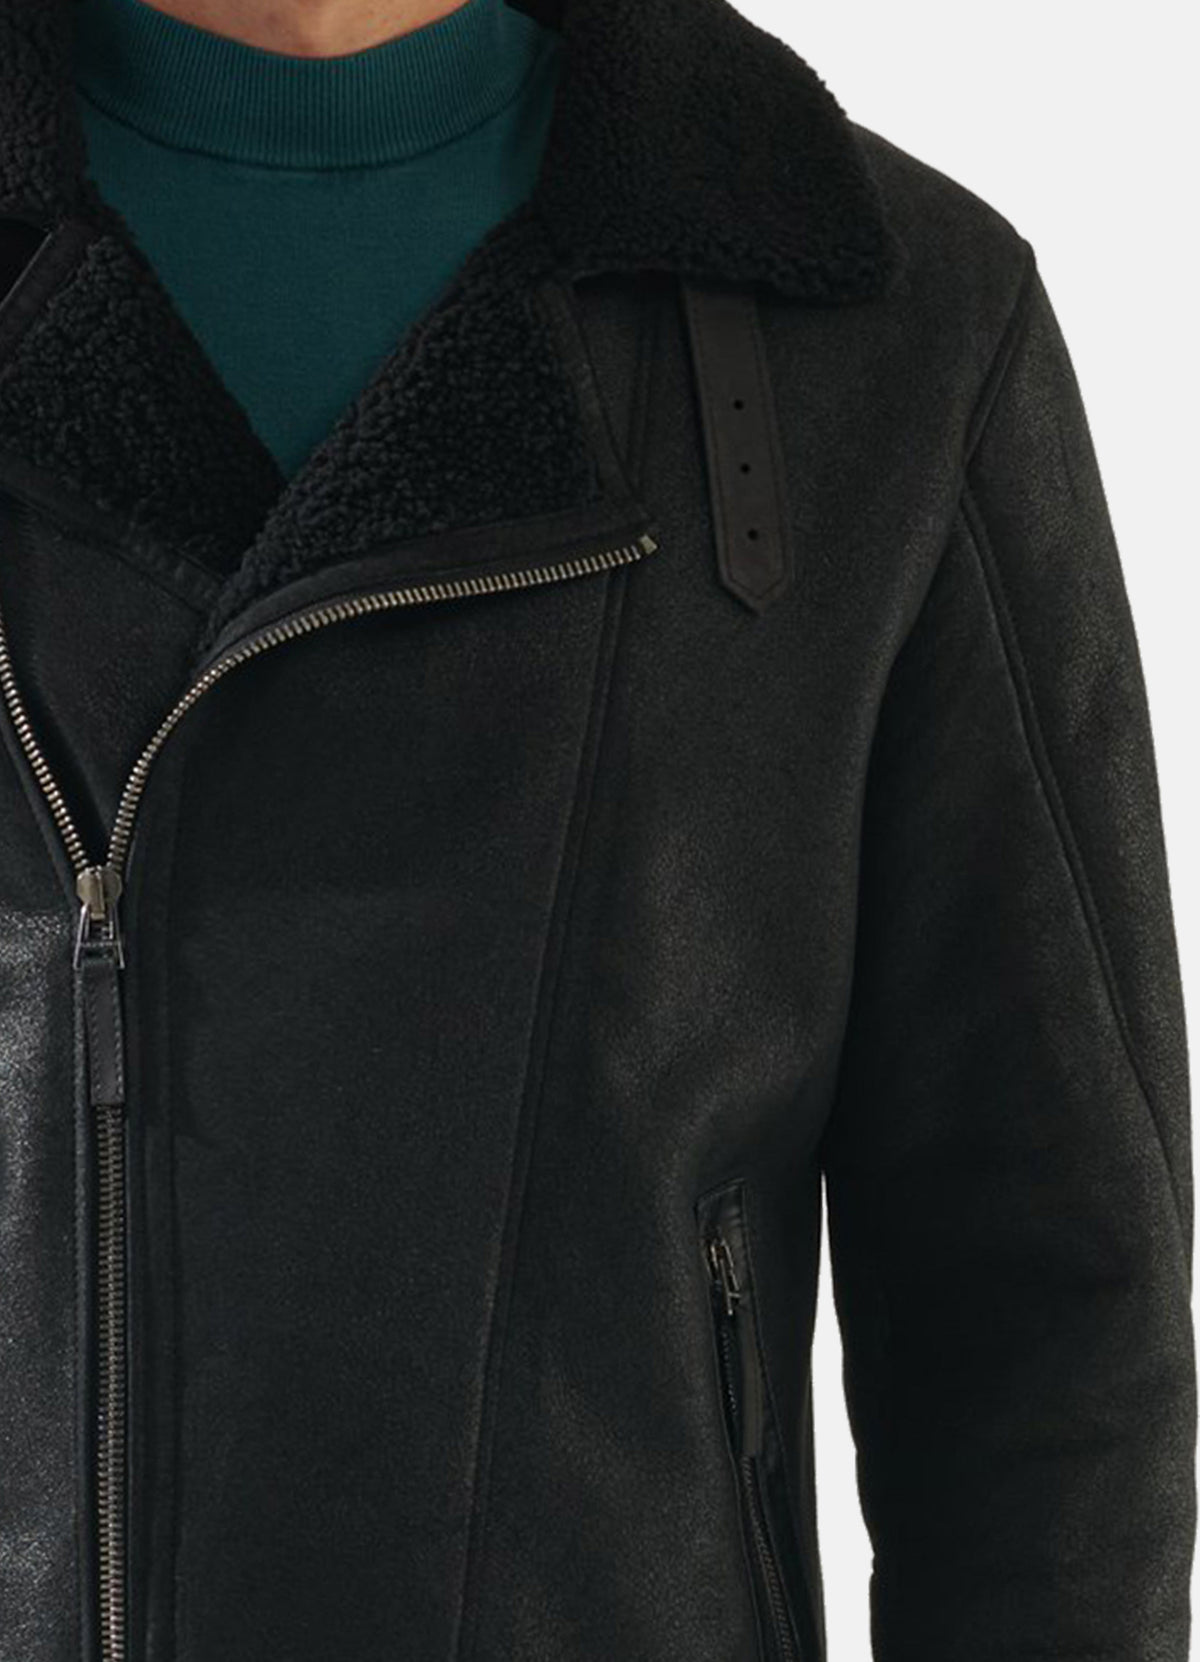 Mens Jade Black Shearling Leather Jacket | Elite Jacket